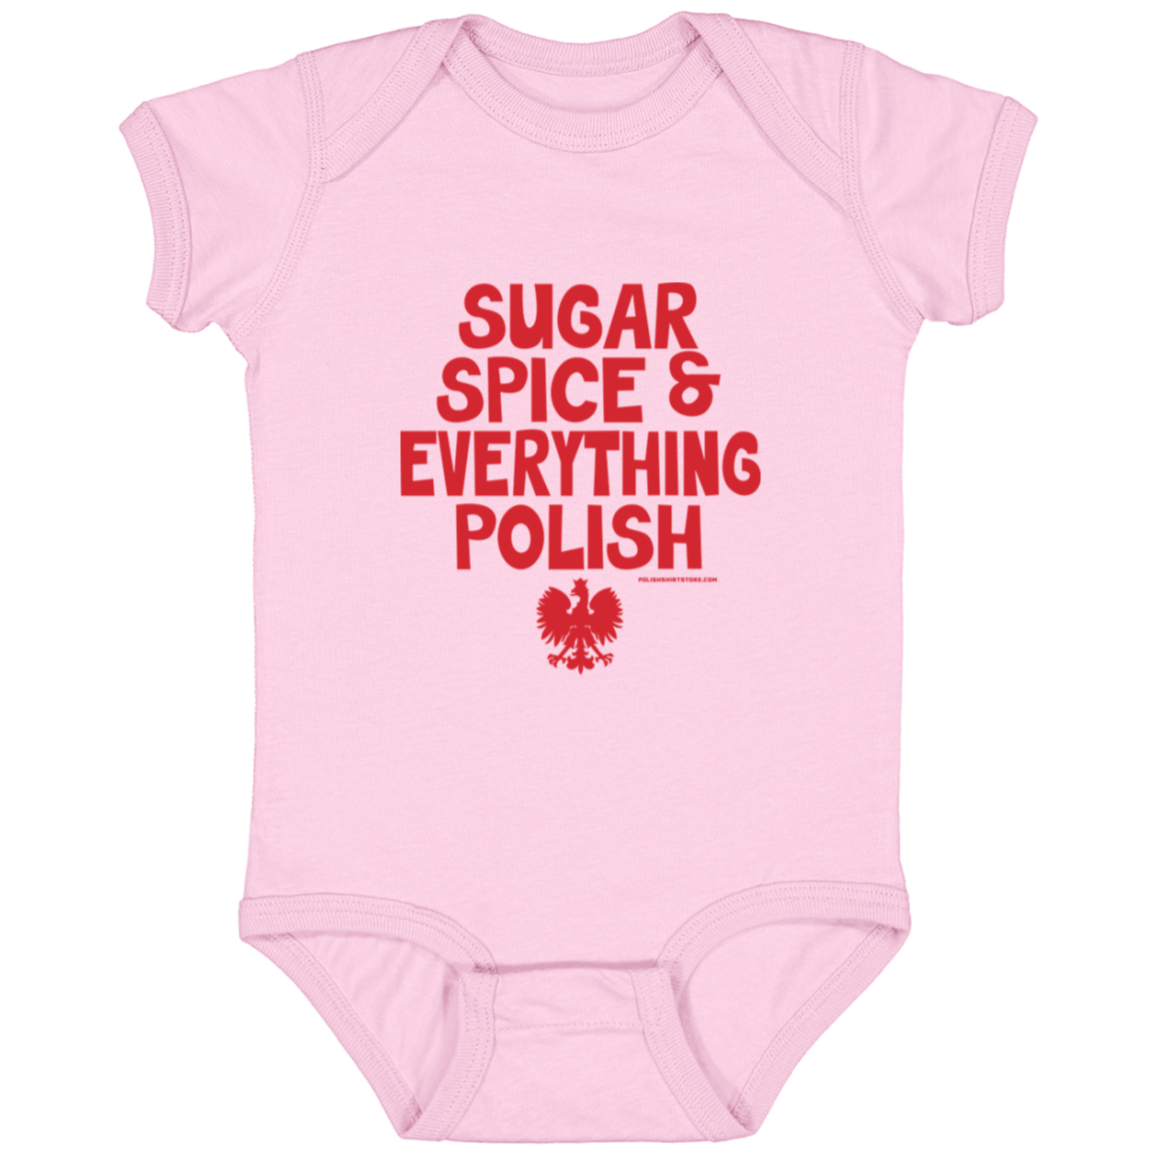 Sugar Spice & Everything Polish Infant Bodysuit Baby CustomCat Pink Newborn 